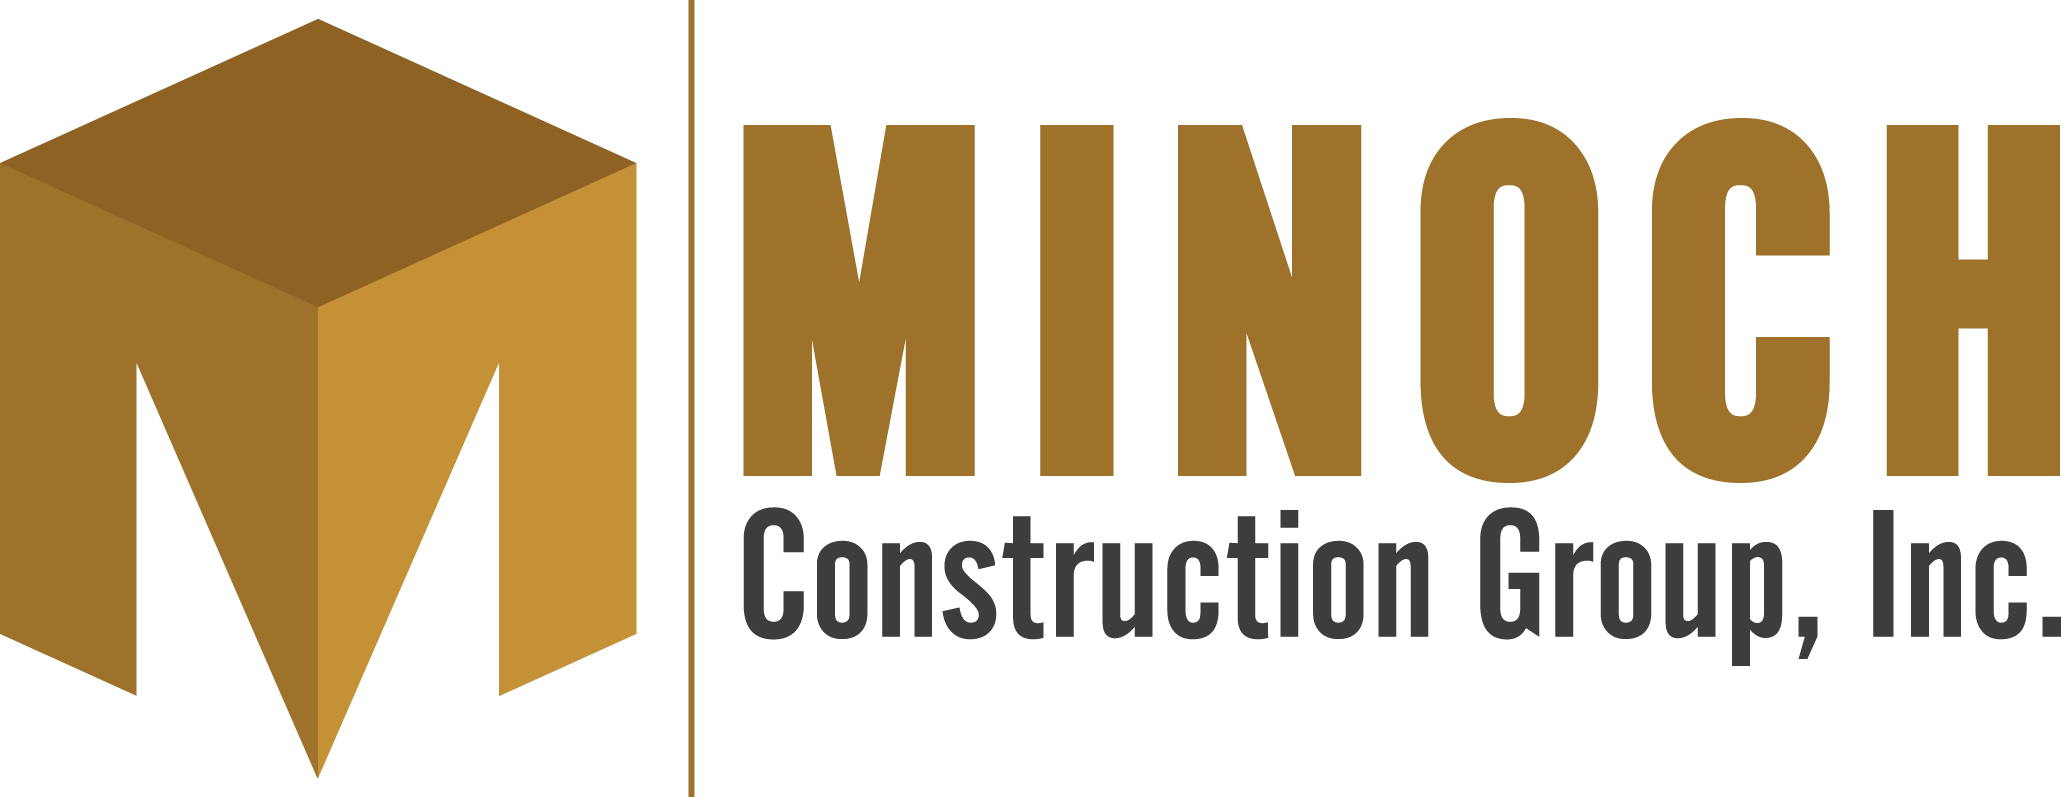 MINOCH CONSTRUCTION GROUP, INC. (Copy)